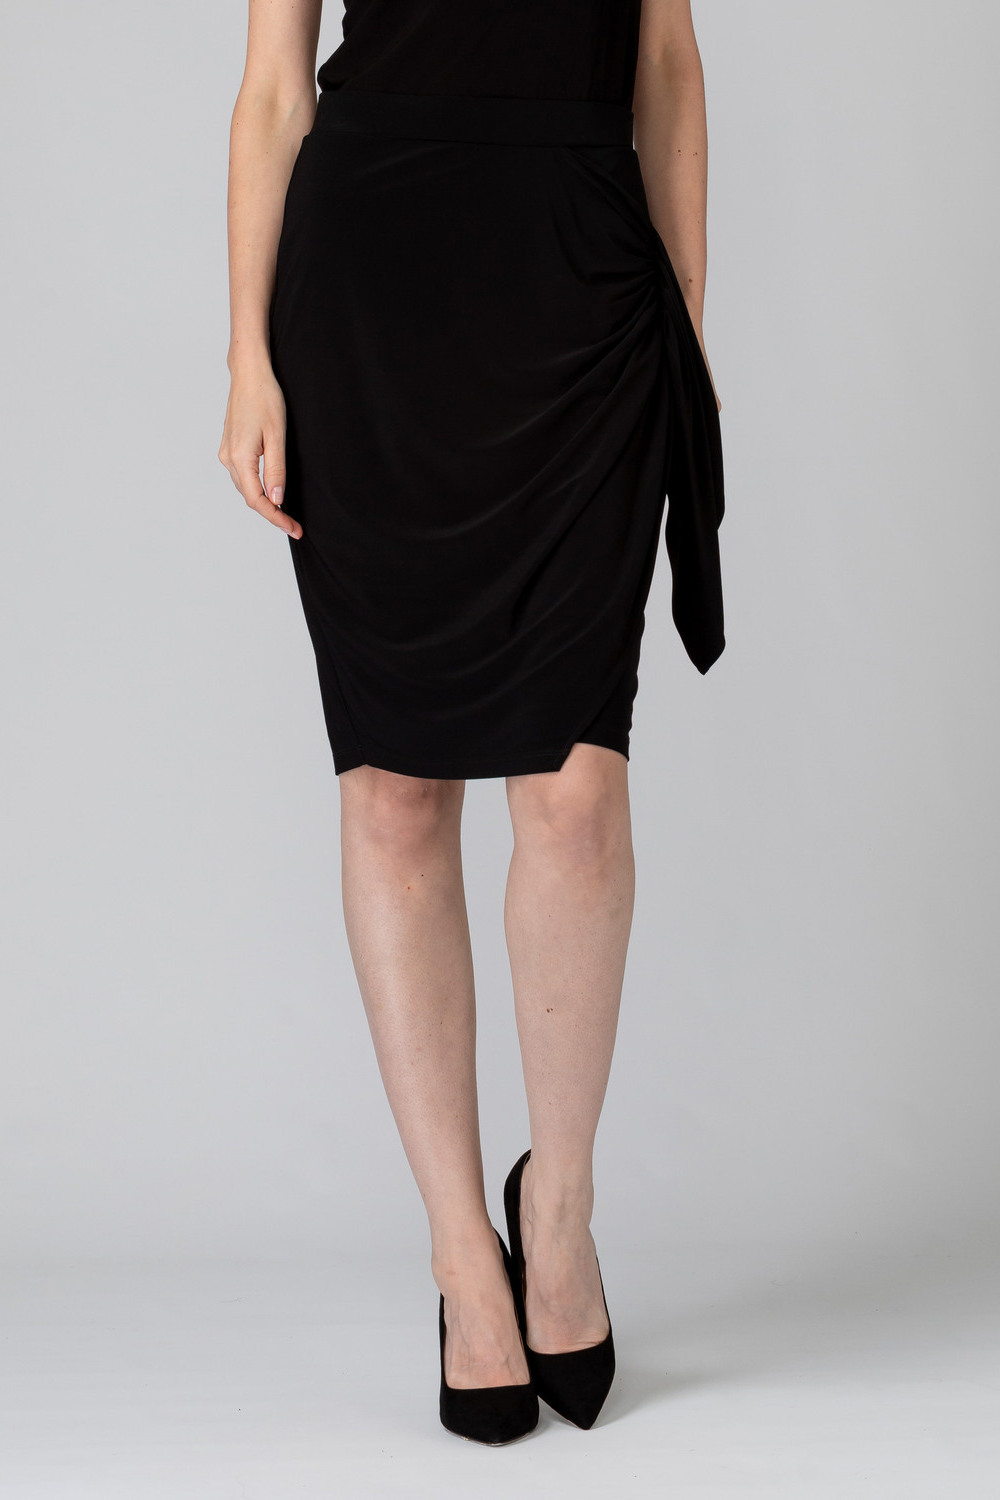 Joseph Ribkoff Skirt Style 194087. Black